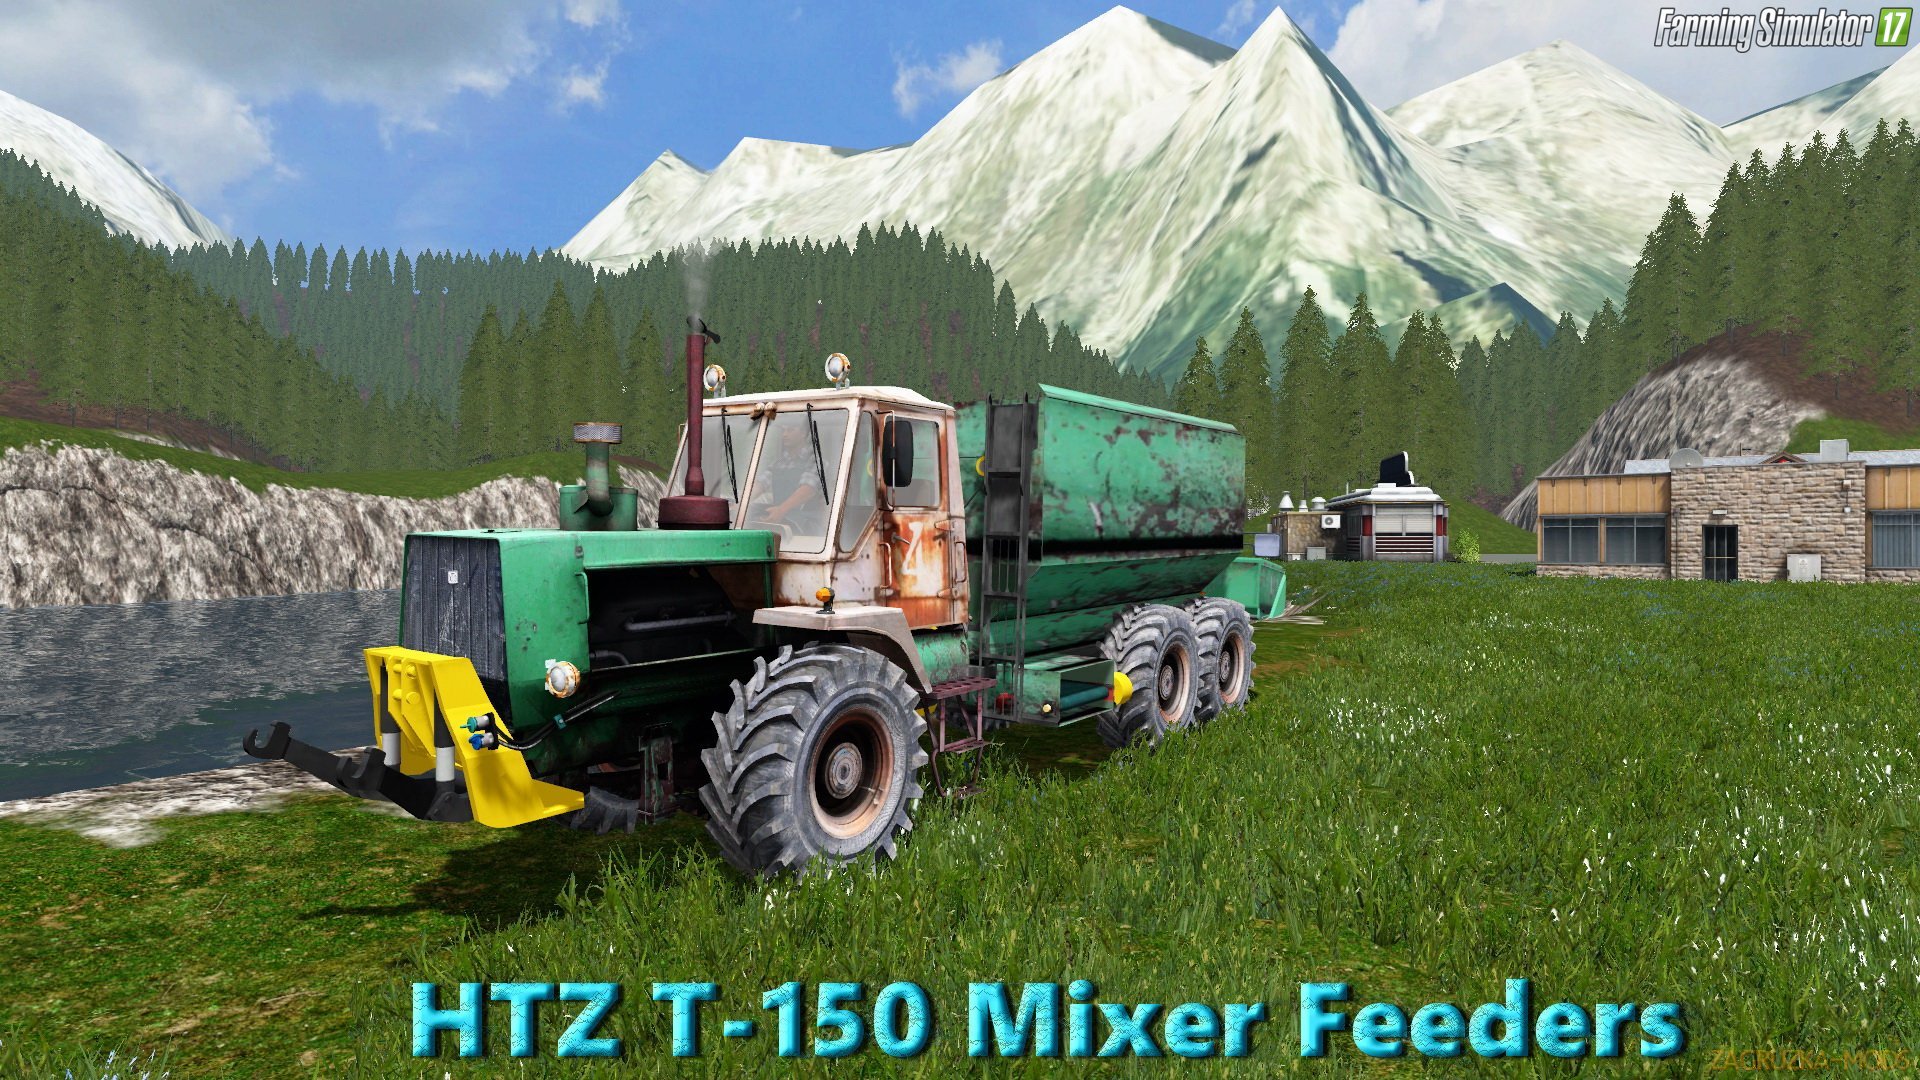 HTZ T-150 Mixer Feeders v1.0 for FS 17